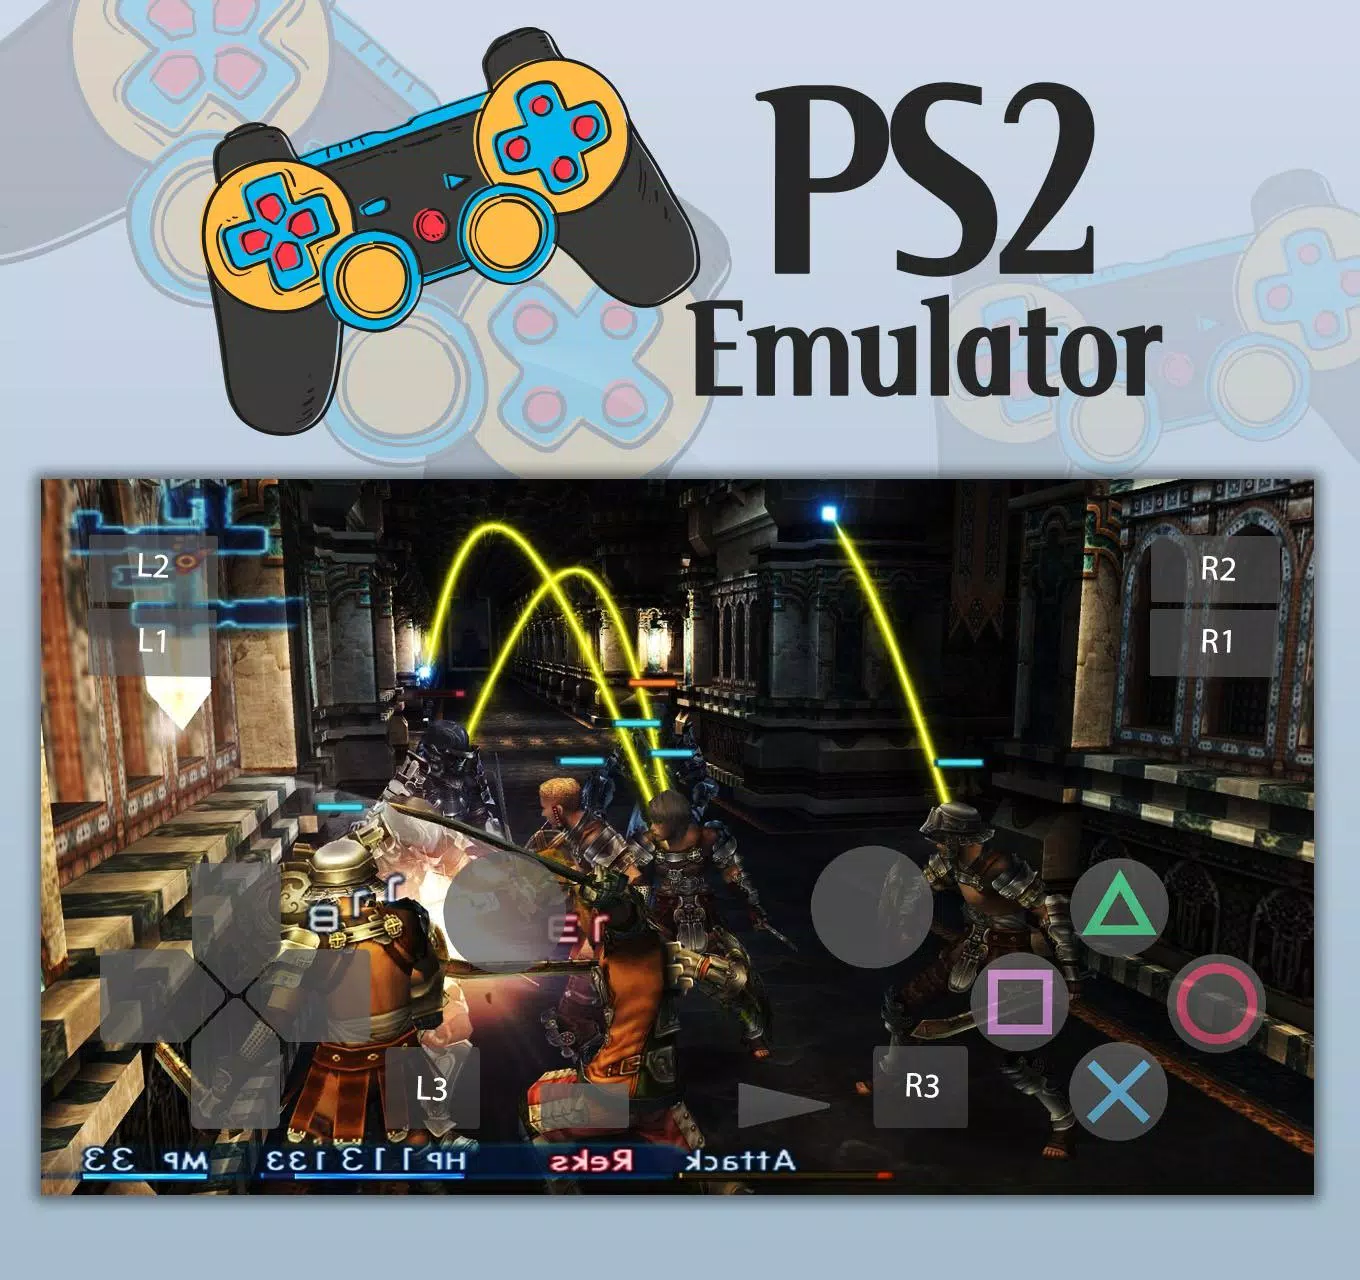 PS2 ROMs FREE - Playstation 2 ROMs - Emulator Games